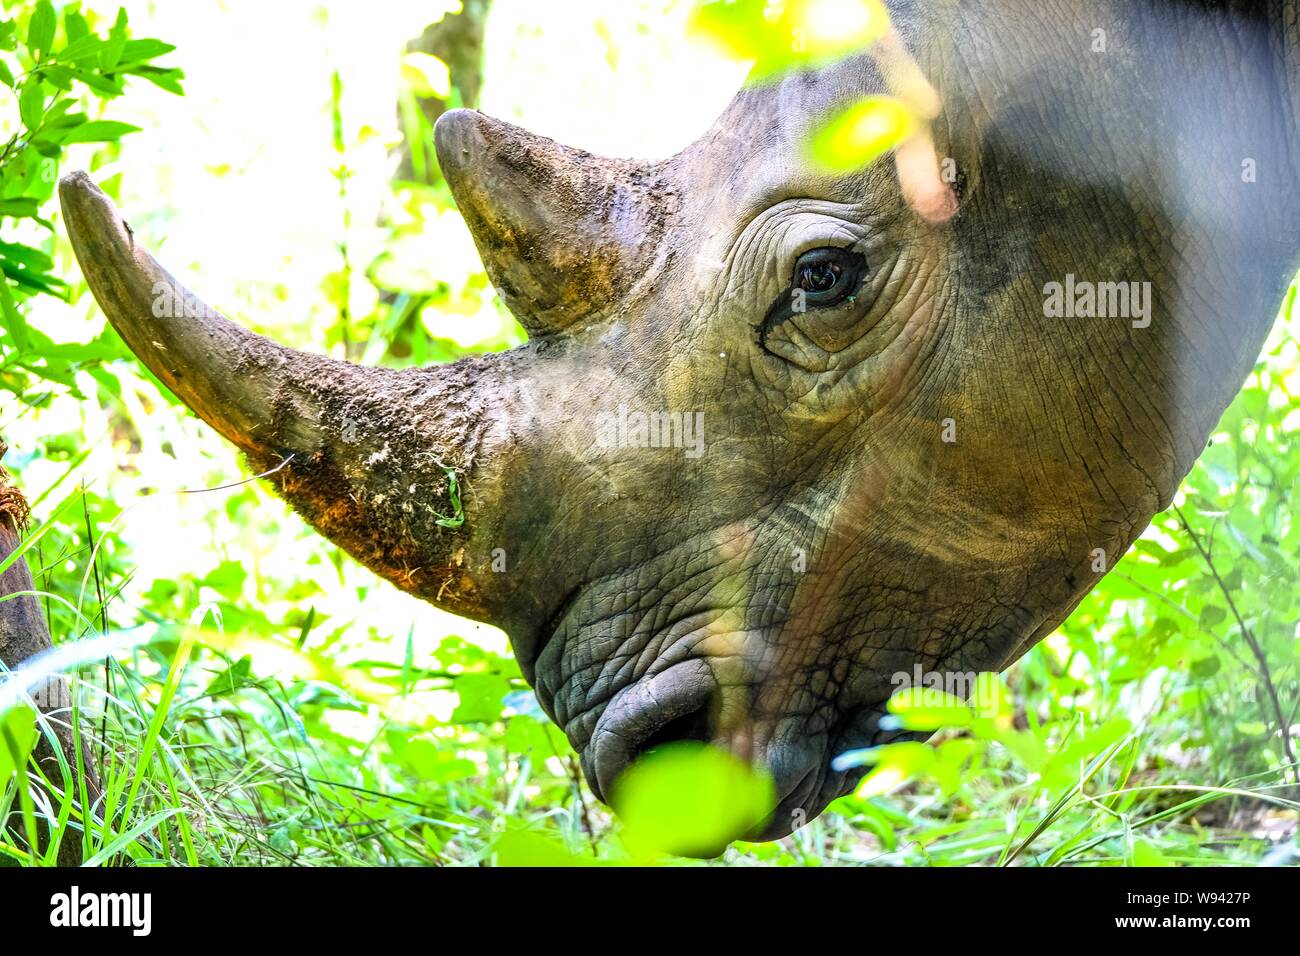 Closeup shot of a rhino's head near plants and a tree no a sunny day Stock Photo